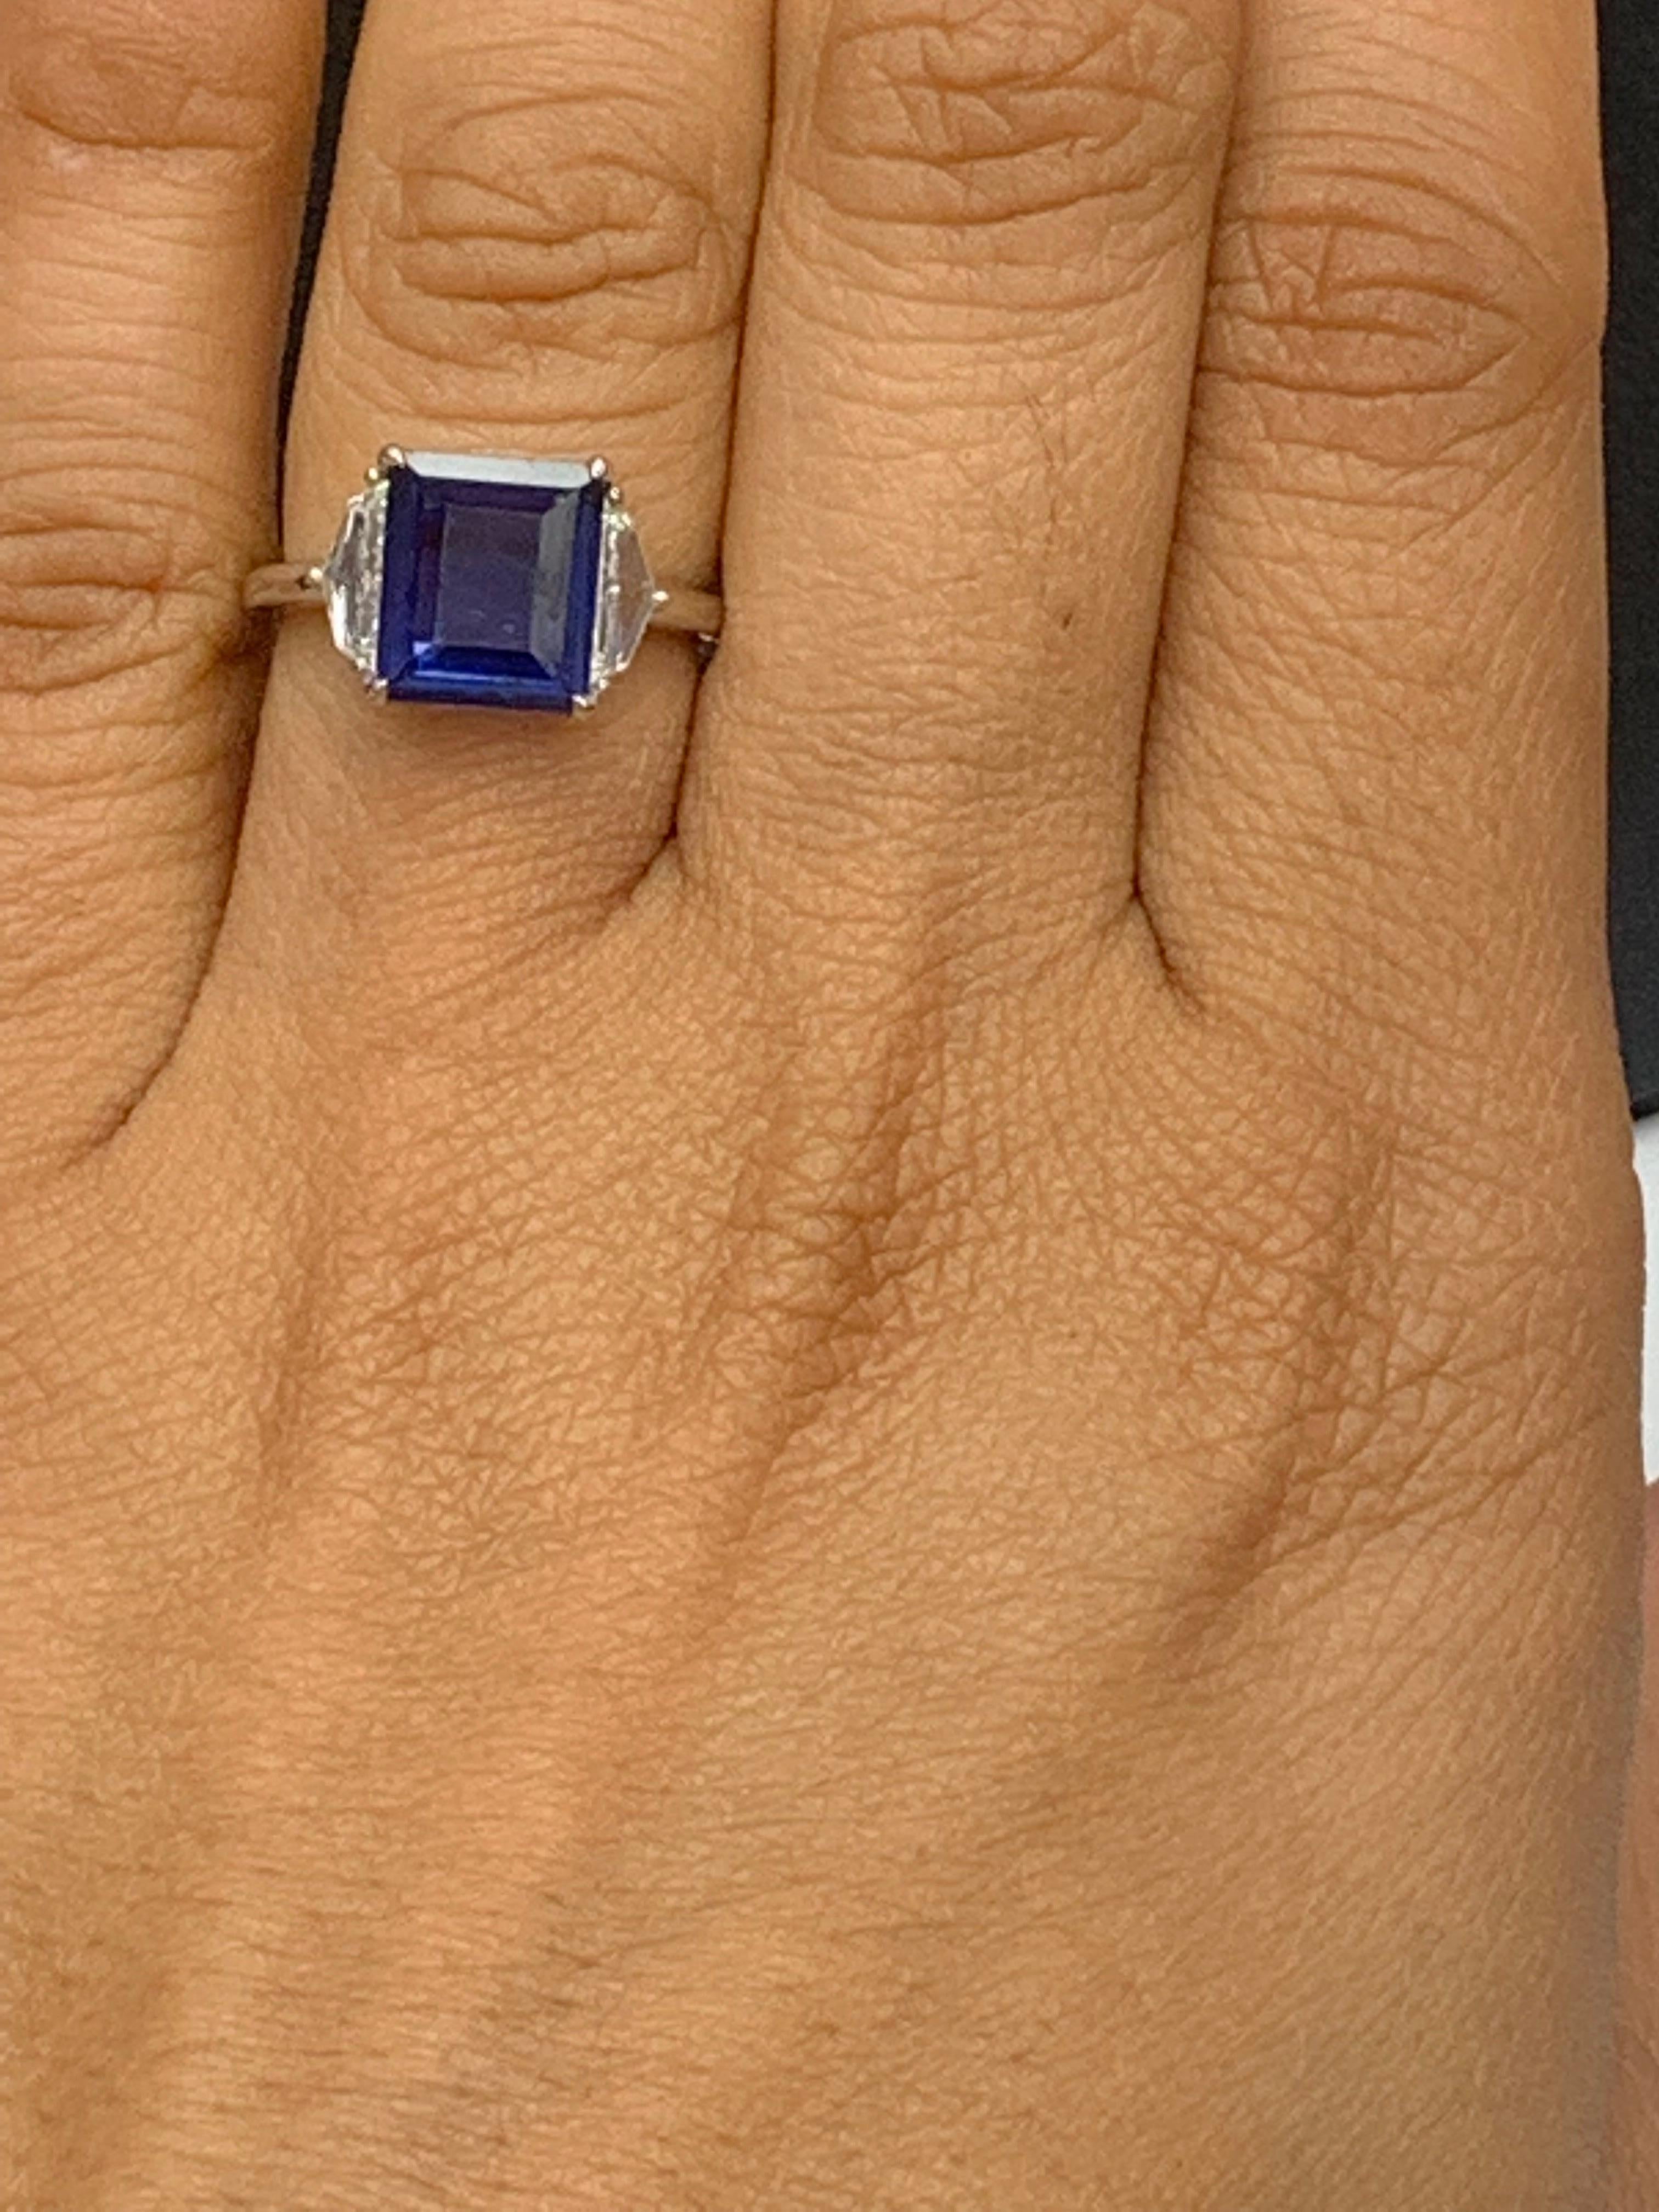 Women's Certified 2.84 Carat Emerald Cut Sapphire & Diamond Engagement Ring in Platinum For Sale